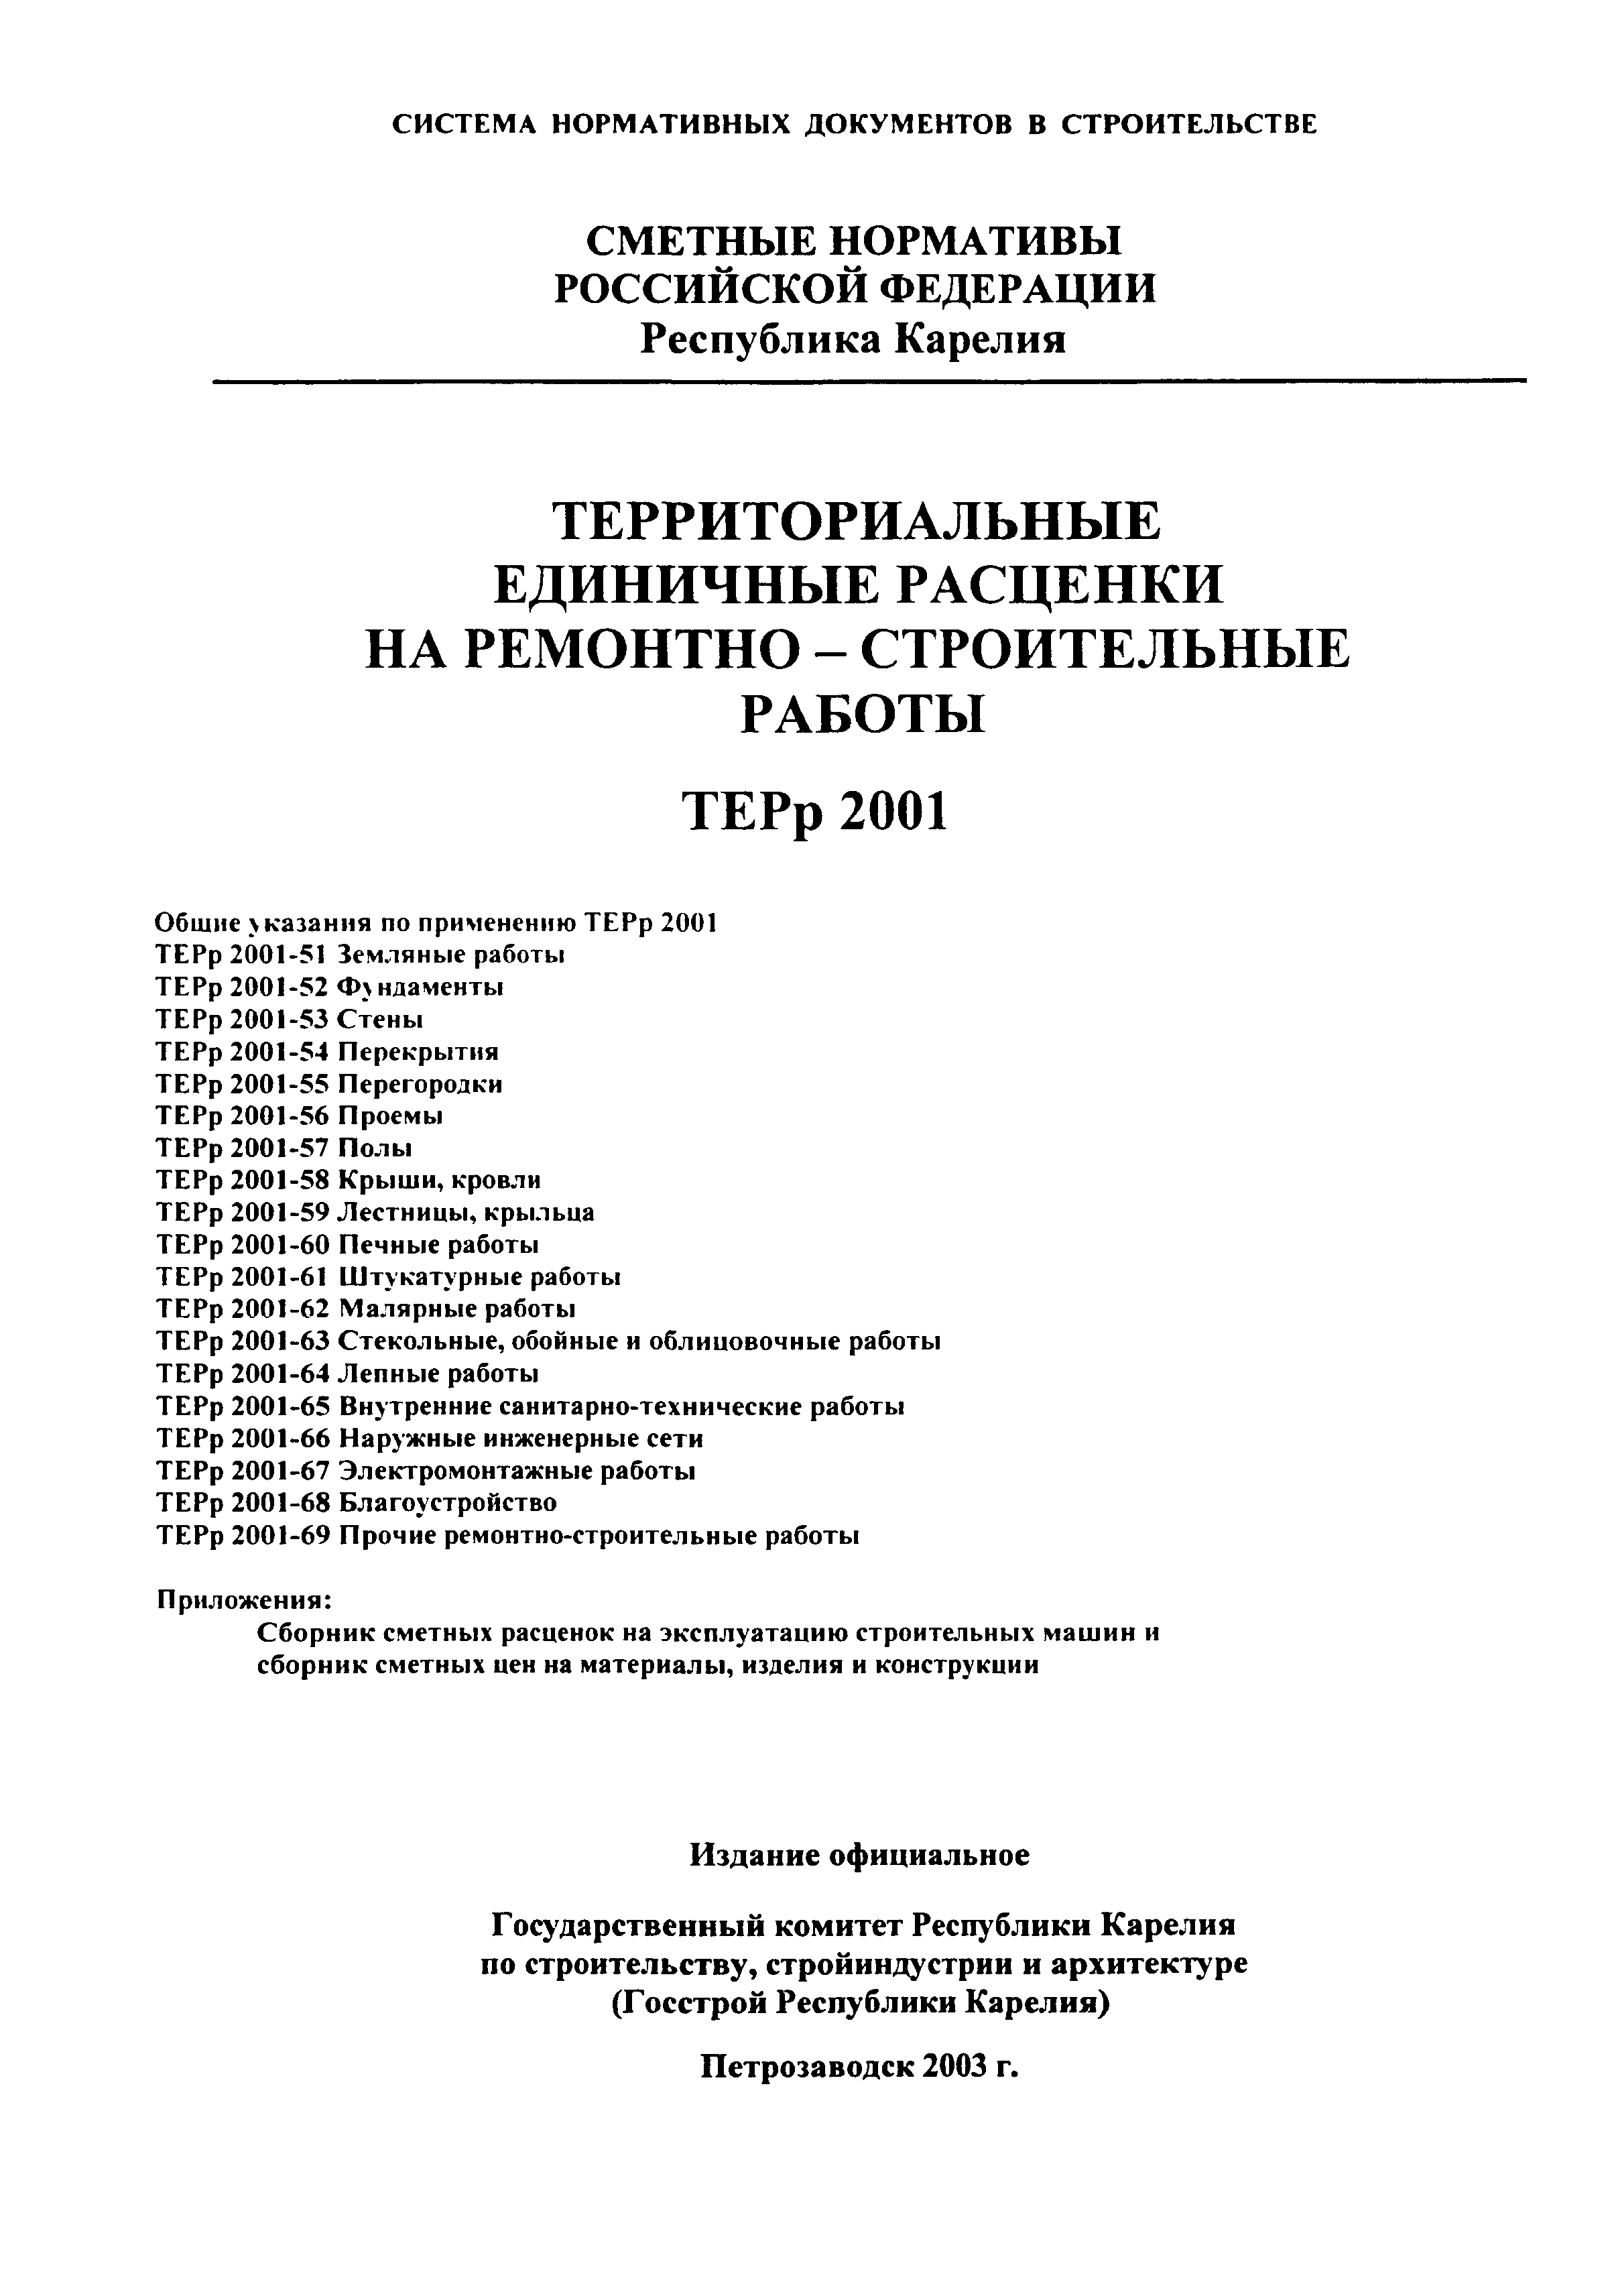 ТЕРр Республика Карелия 2001-60